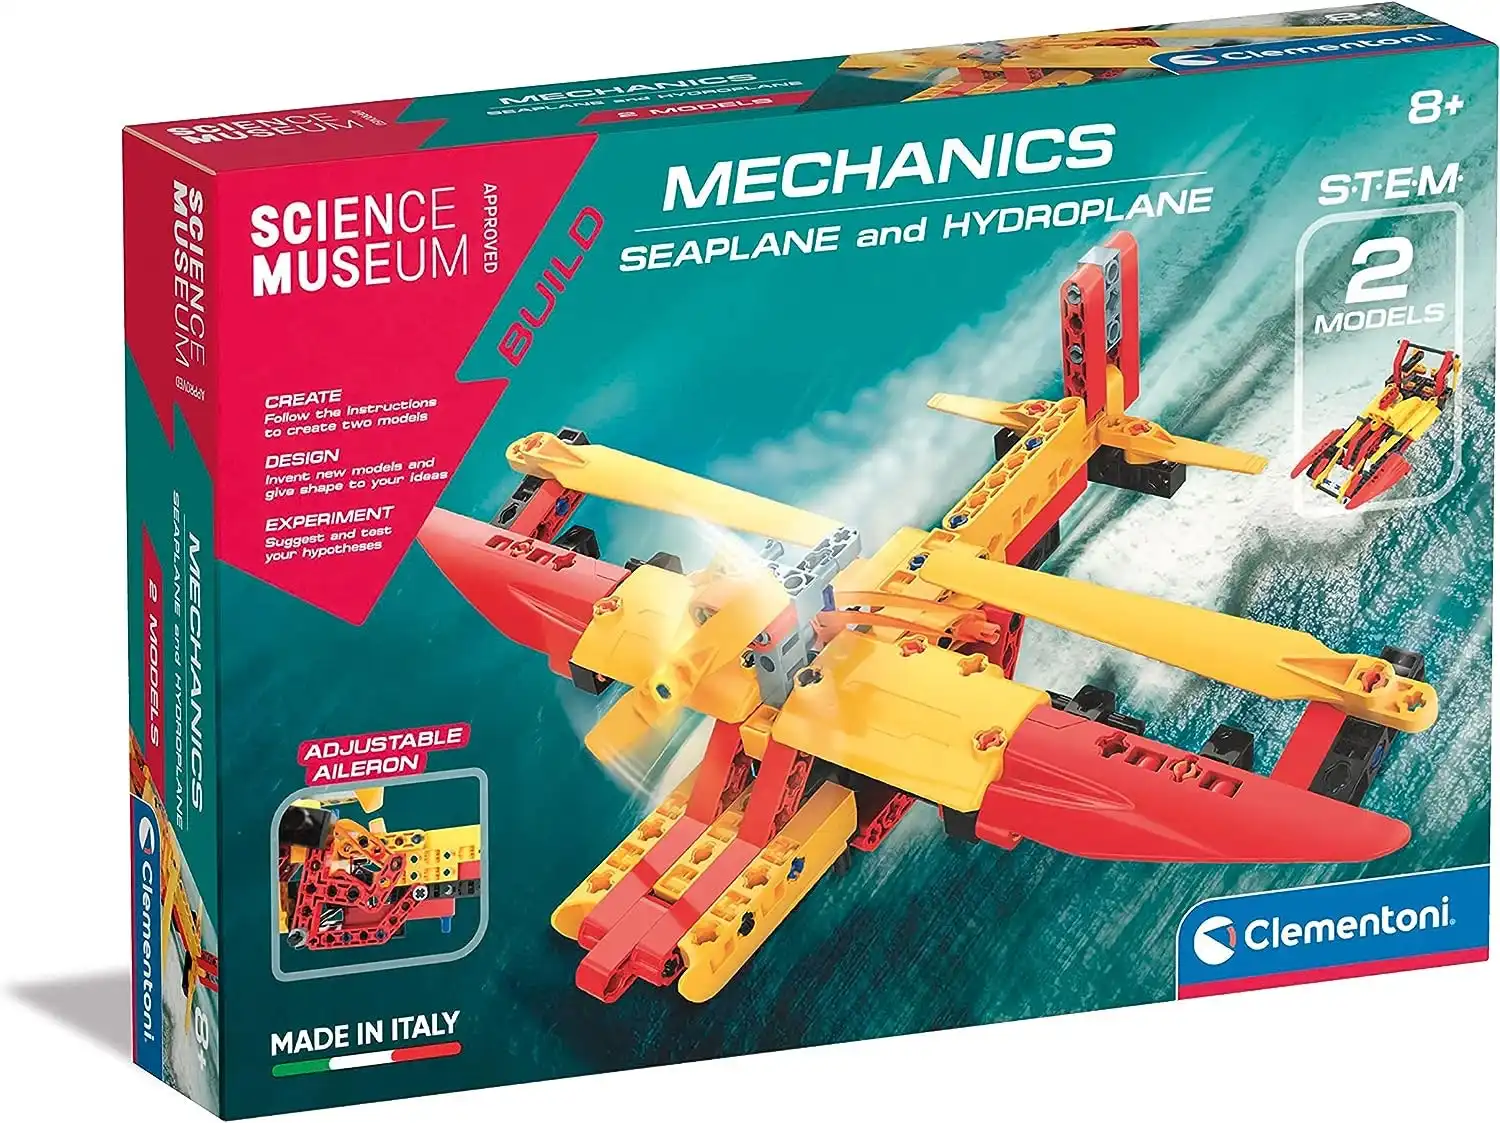 Clementoni Mechanics Seaplane and Hyrdoplane